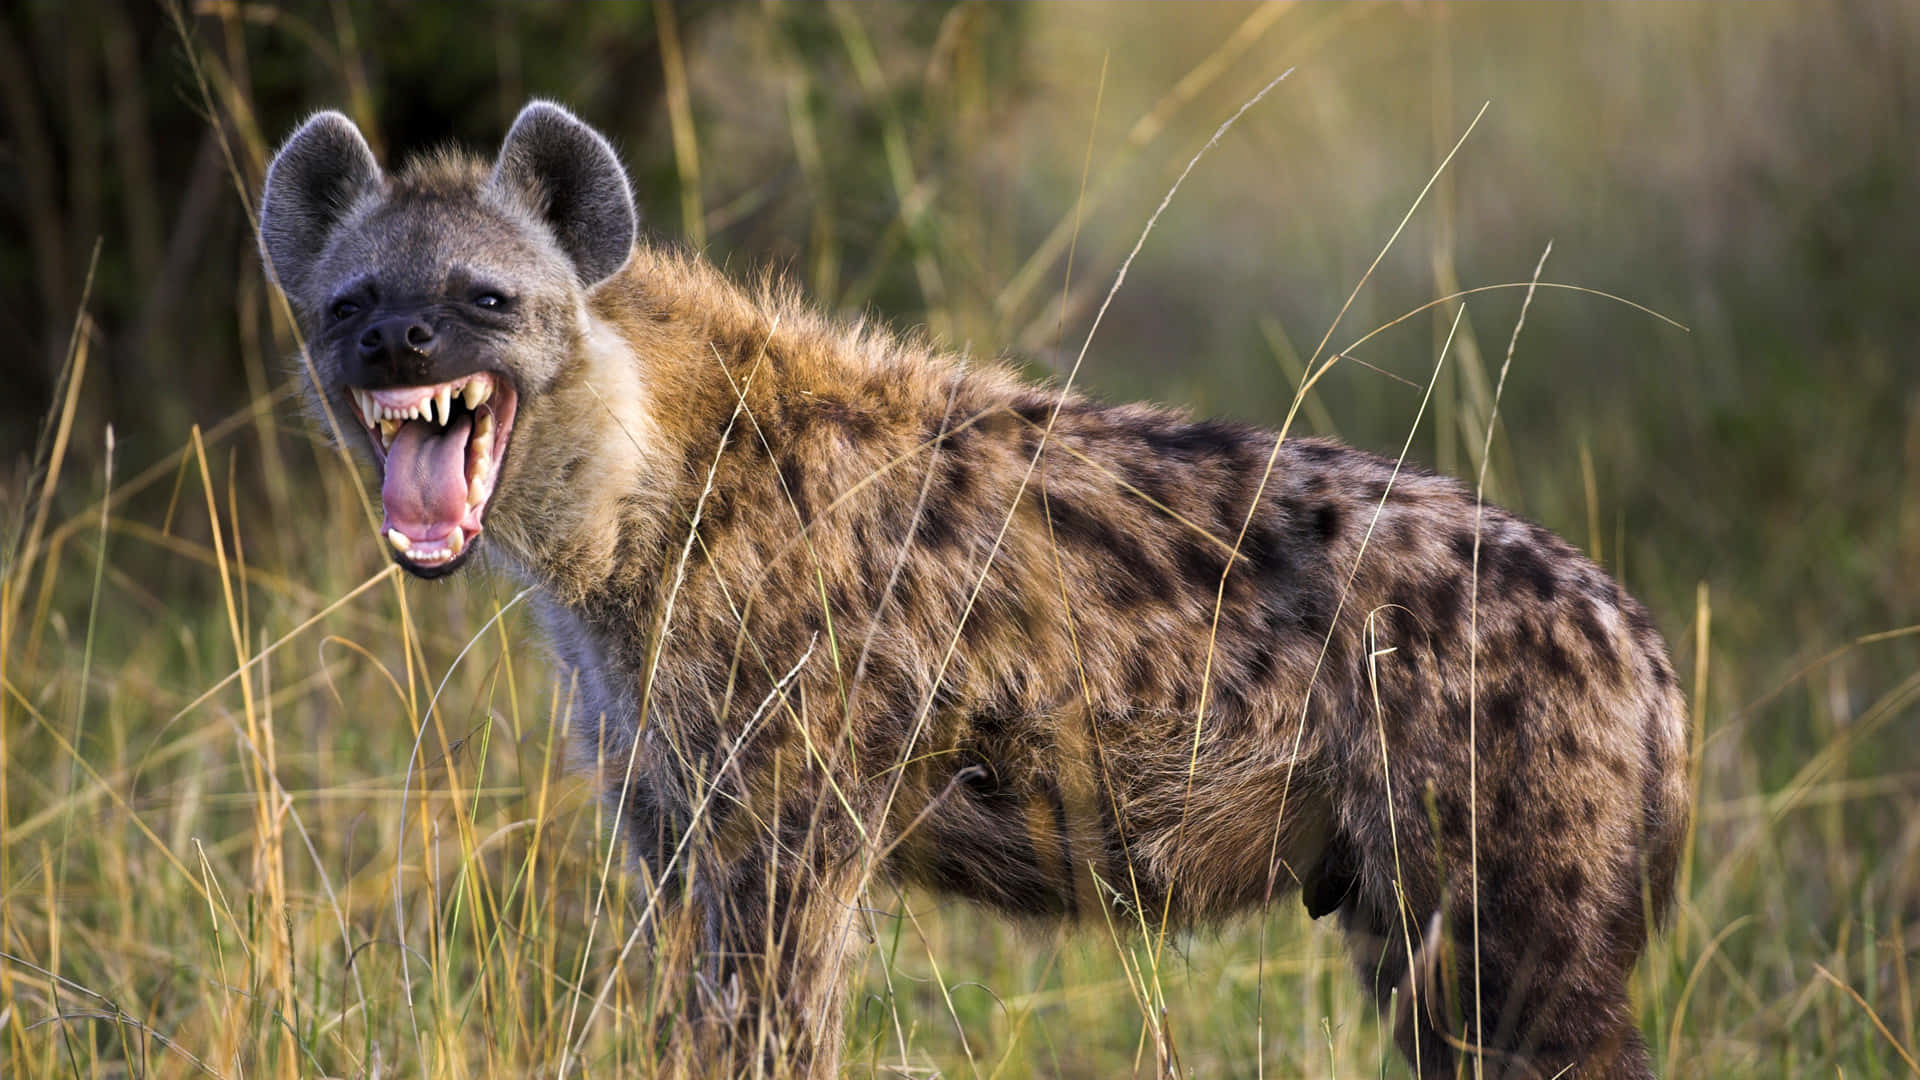 Spotted Hyenain Grassland.jpg Wallpaper